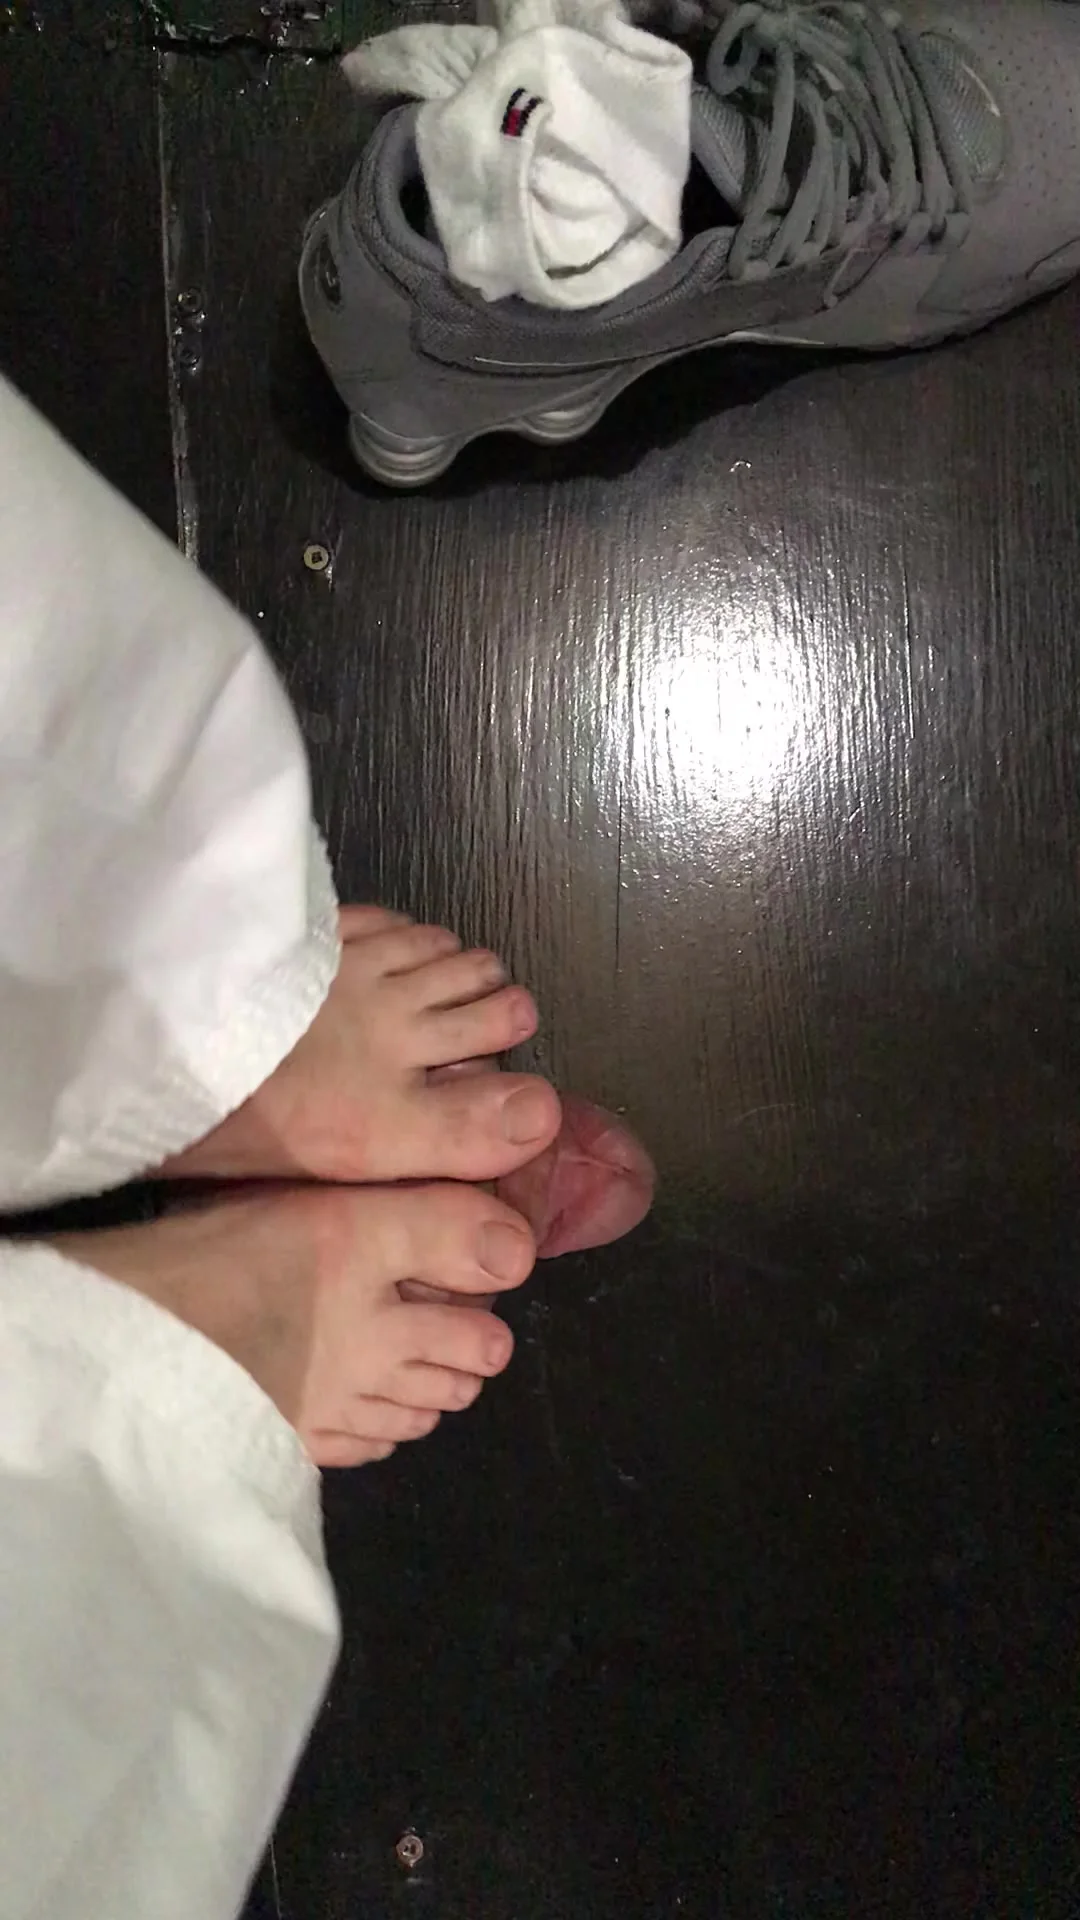 Barefoot Ball Crush - My balls crushed flat under Polish Male feet - ThisVid.com